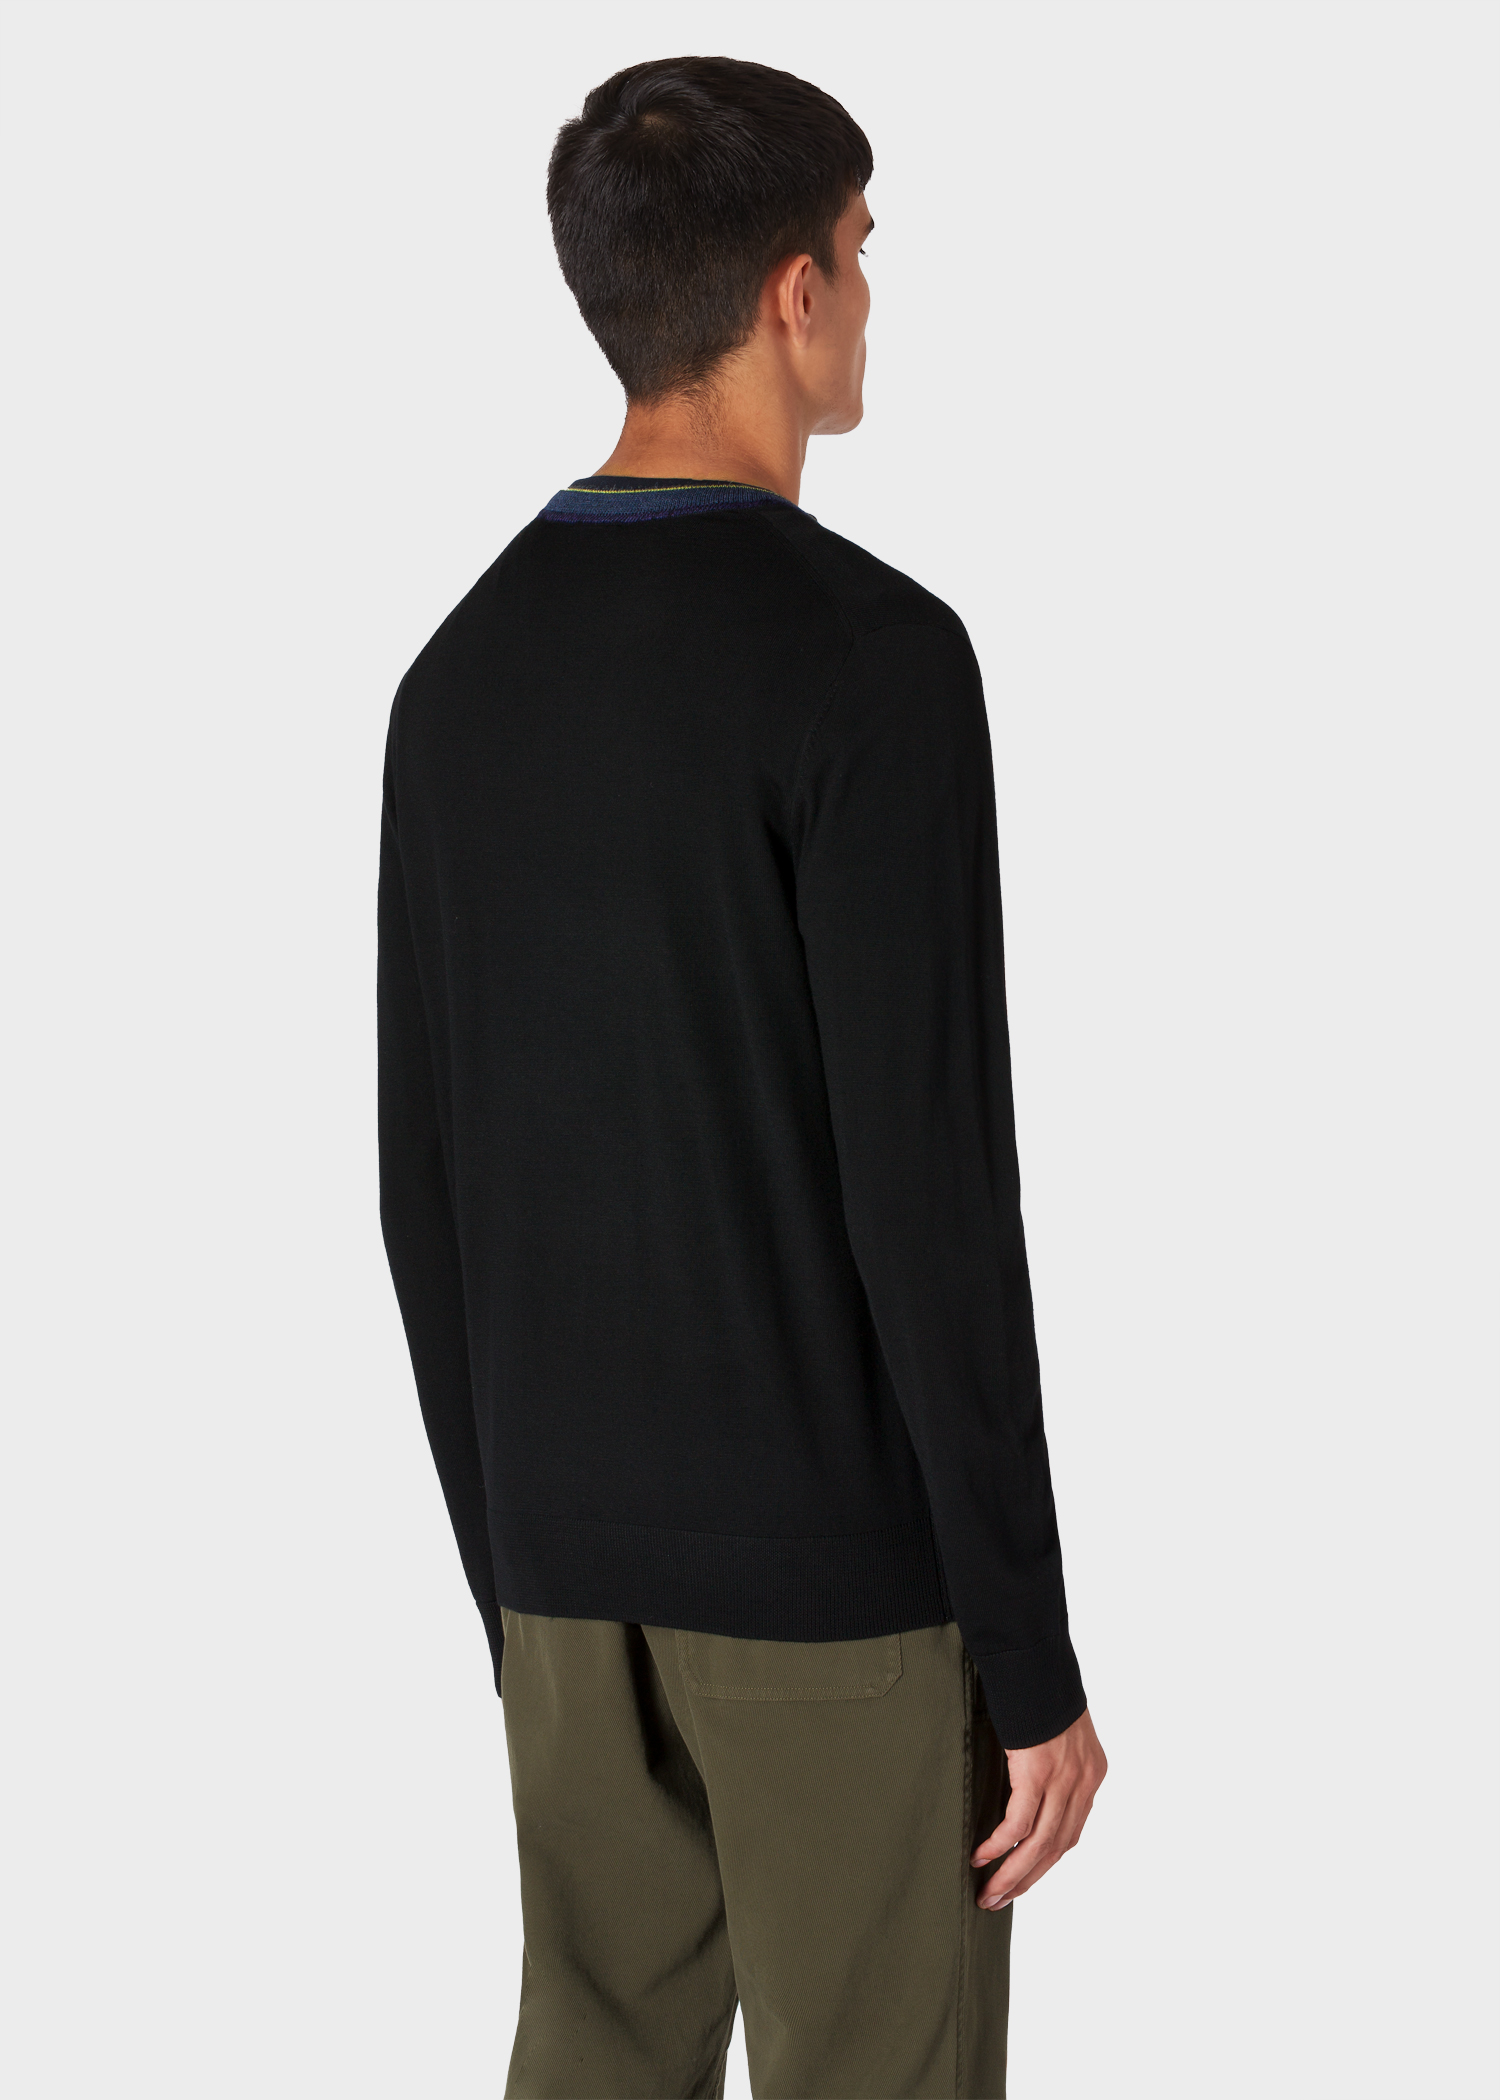 Model back close up - Men's Black Merino Wool Sweater With Contrasting Alpaca Collar